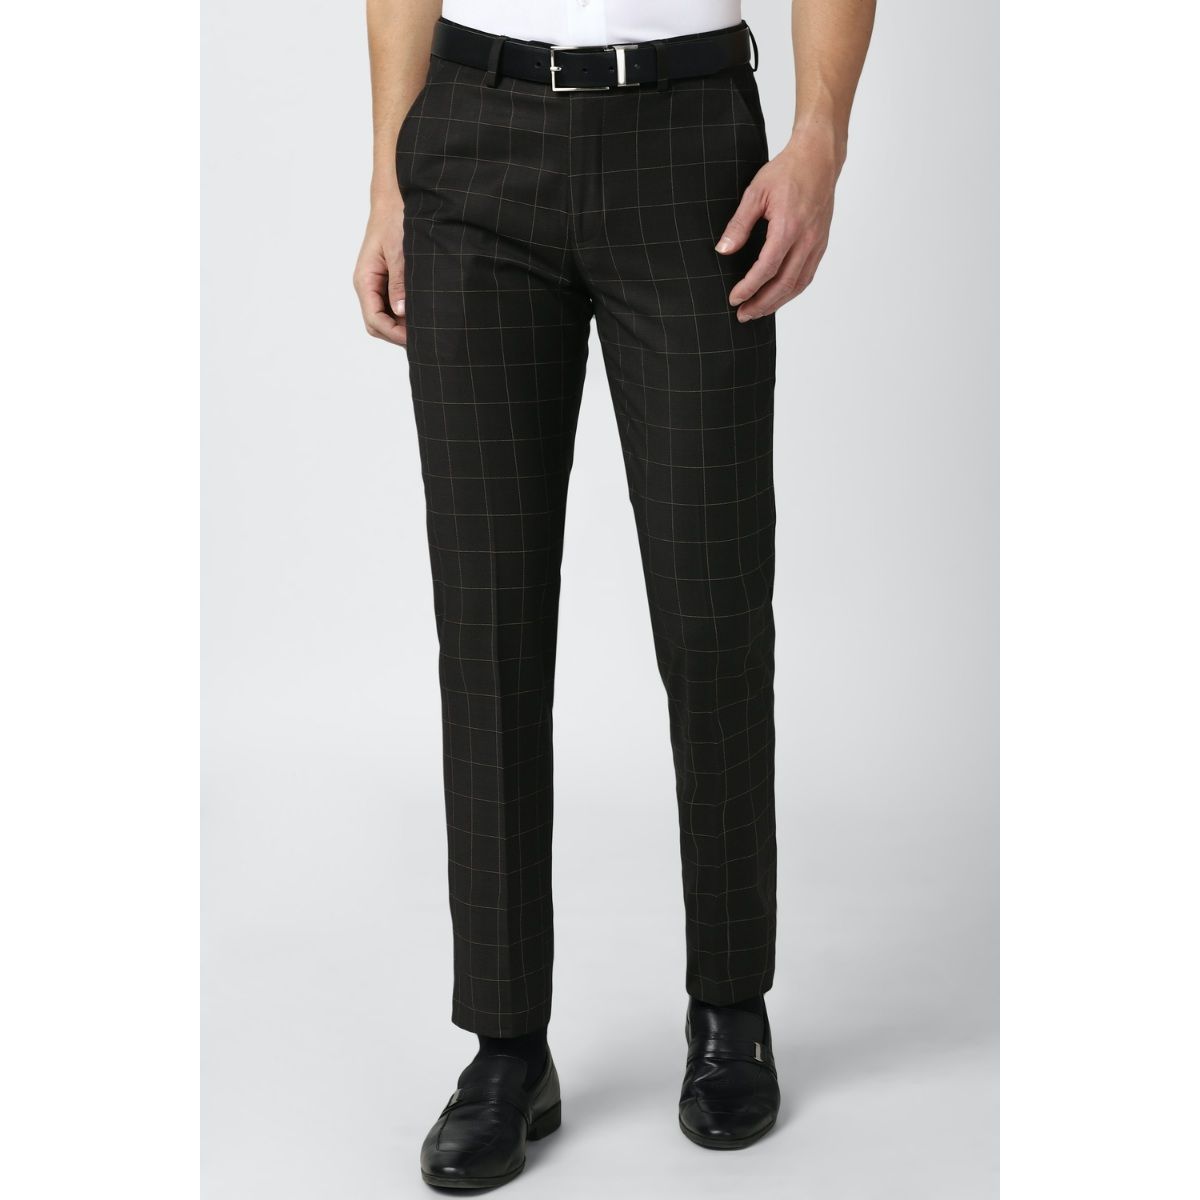 Buy Men Navy Solid Regular Fit Trousers Online - 314422 | Peter England